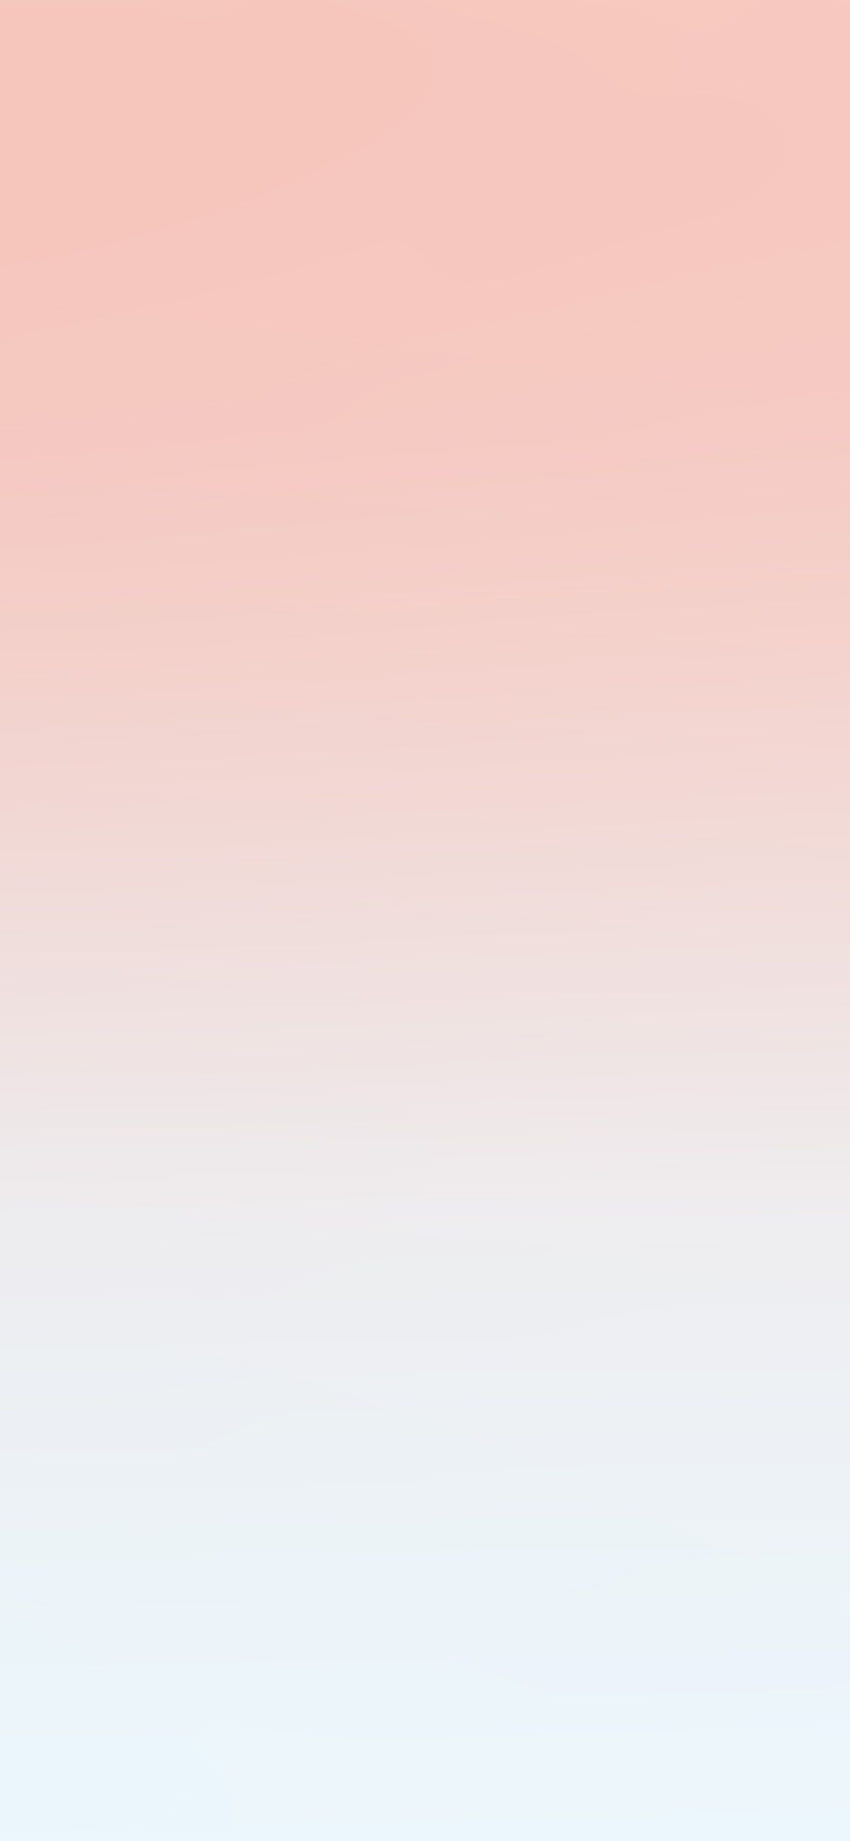 warna pastel,putih,merah muda,coklat,langit,garis,tenang,krem,persik,font,pola,warna krem ​​iphone wallpaper ponsel HD